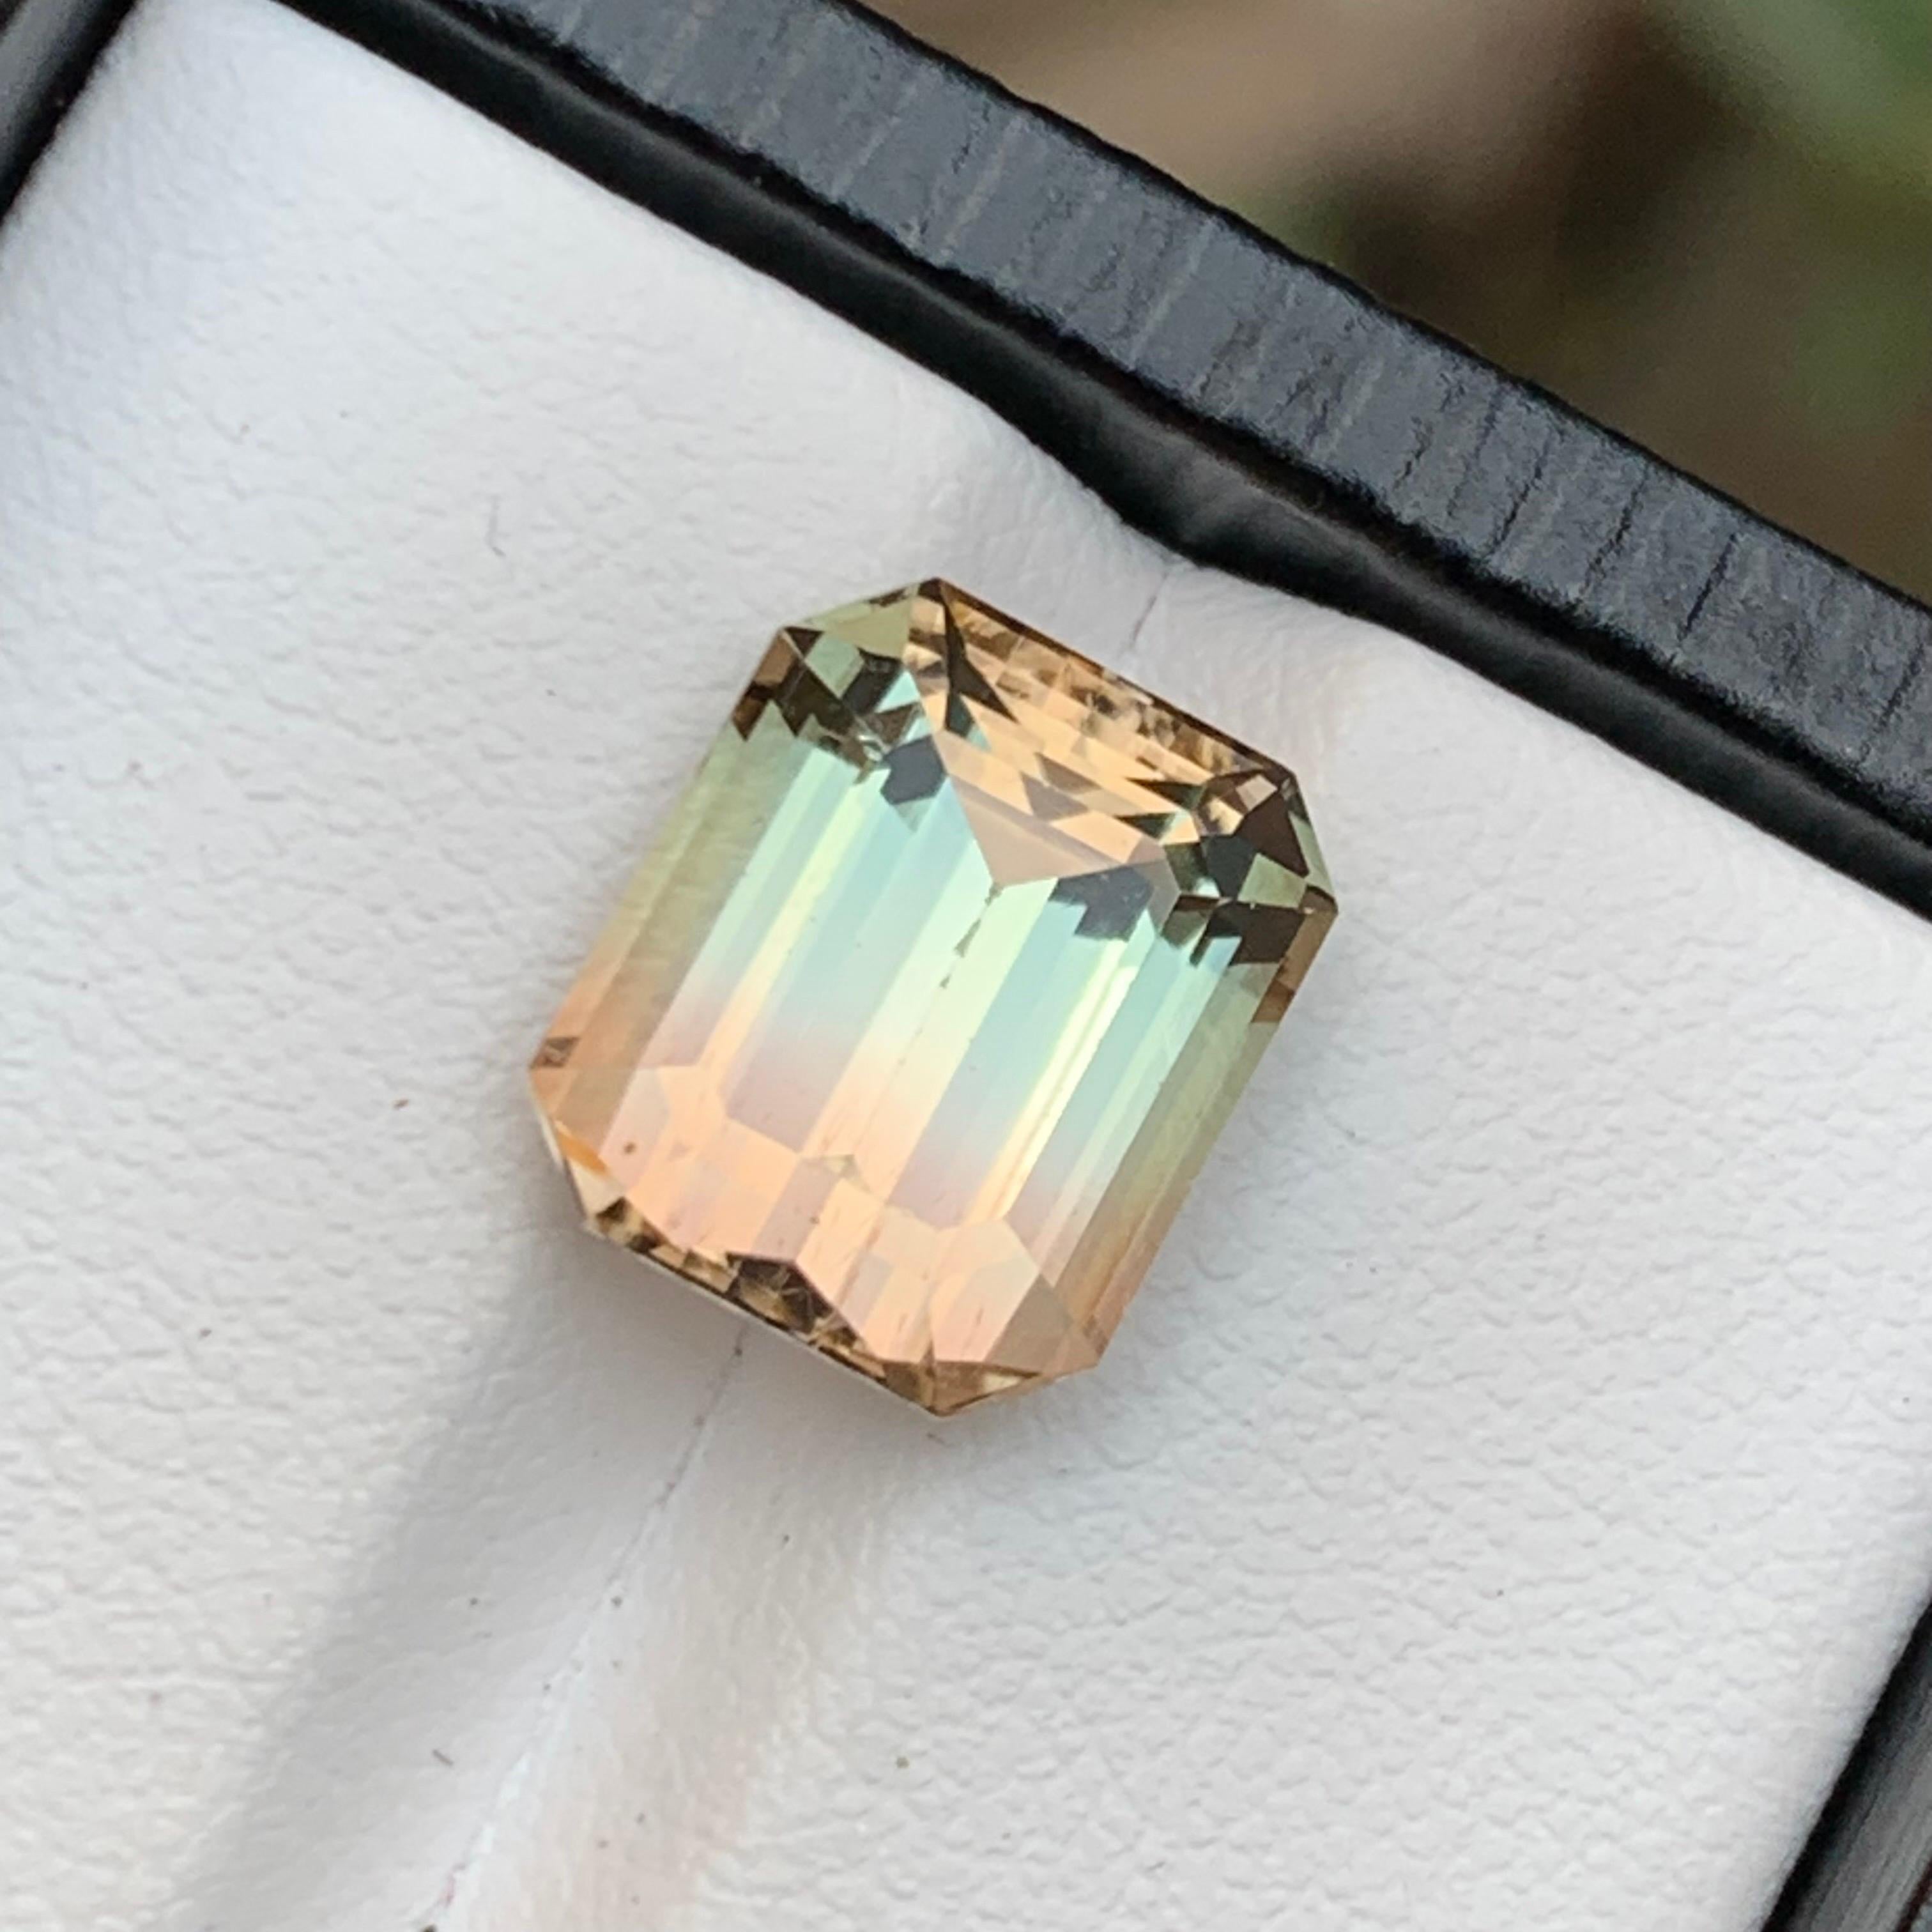 Rare Bicolor Natural Tourmaline Loose Gemstone, 5.80 Carat-Emerald/Octagon Cut For Sale 1